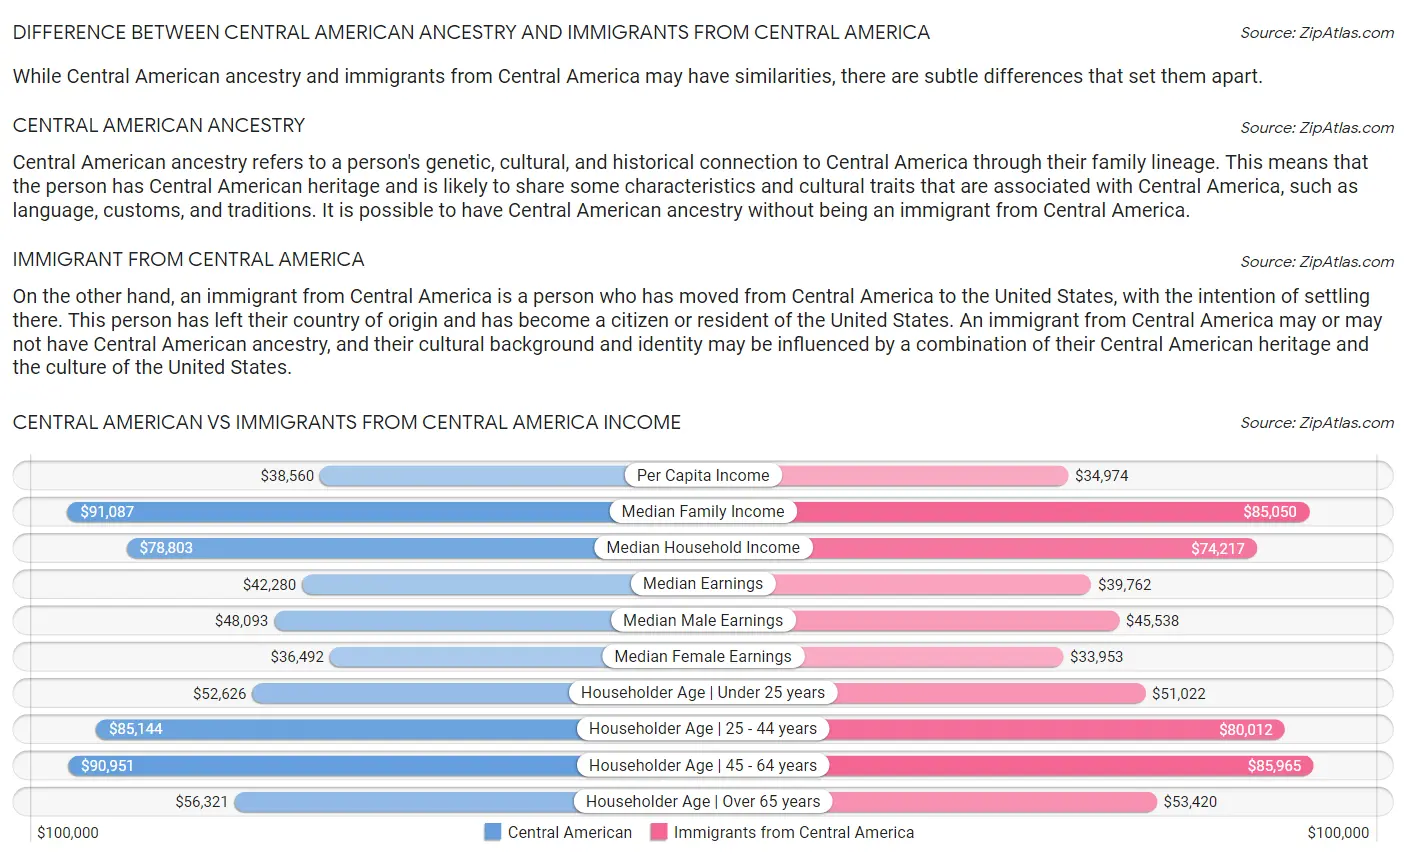 Central American vs Immigrants from Central America Income